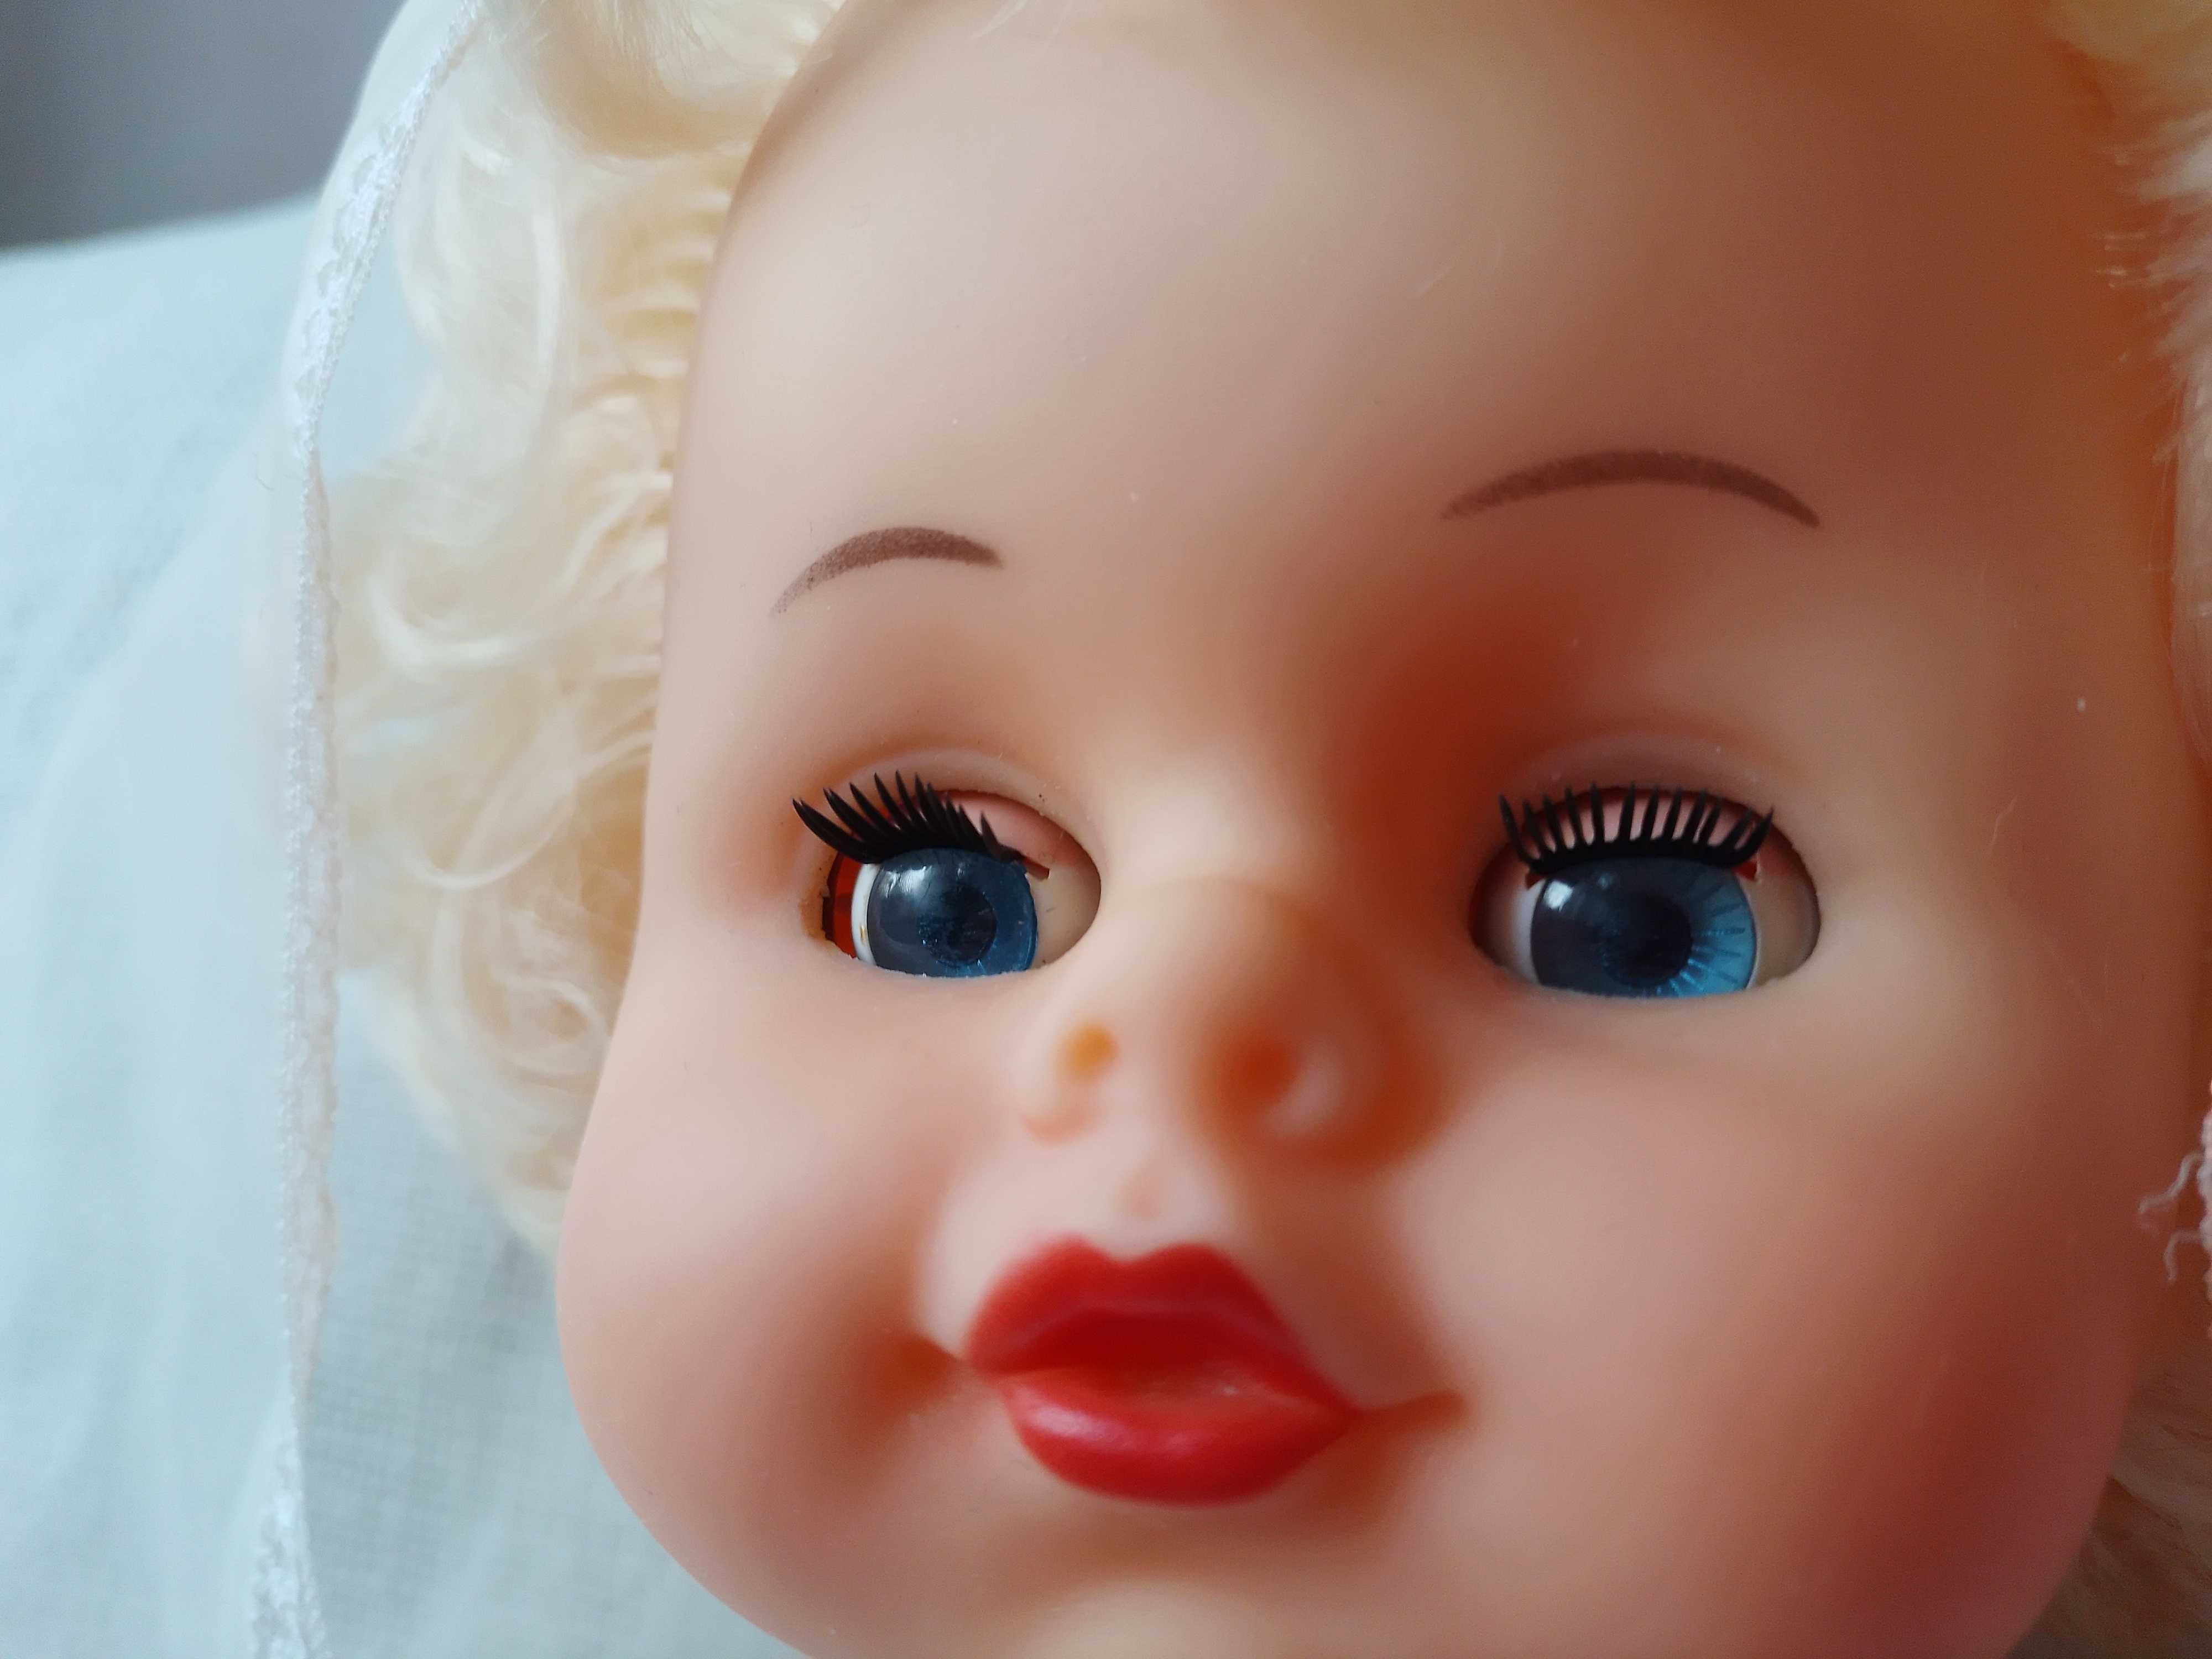 Кукла невеста и Надя Днепропетровской фабрики игрушек.  Цена за обе.